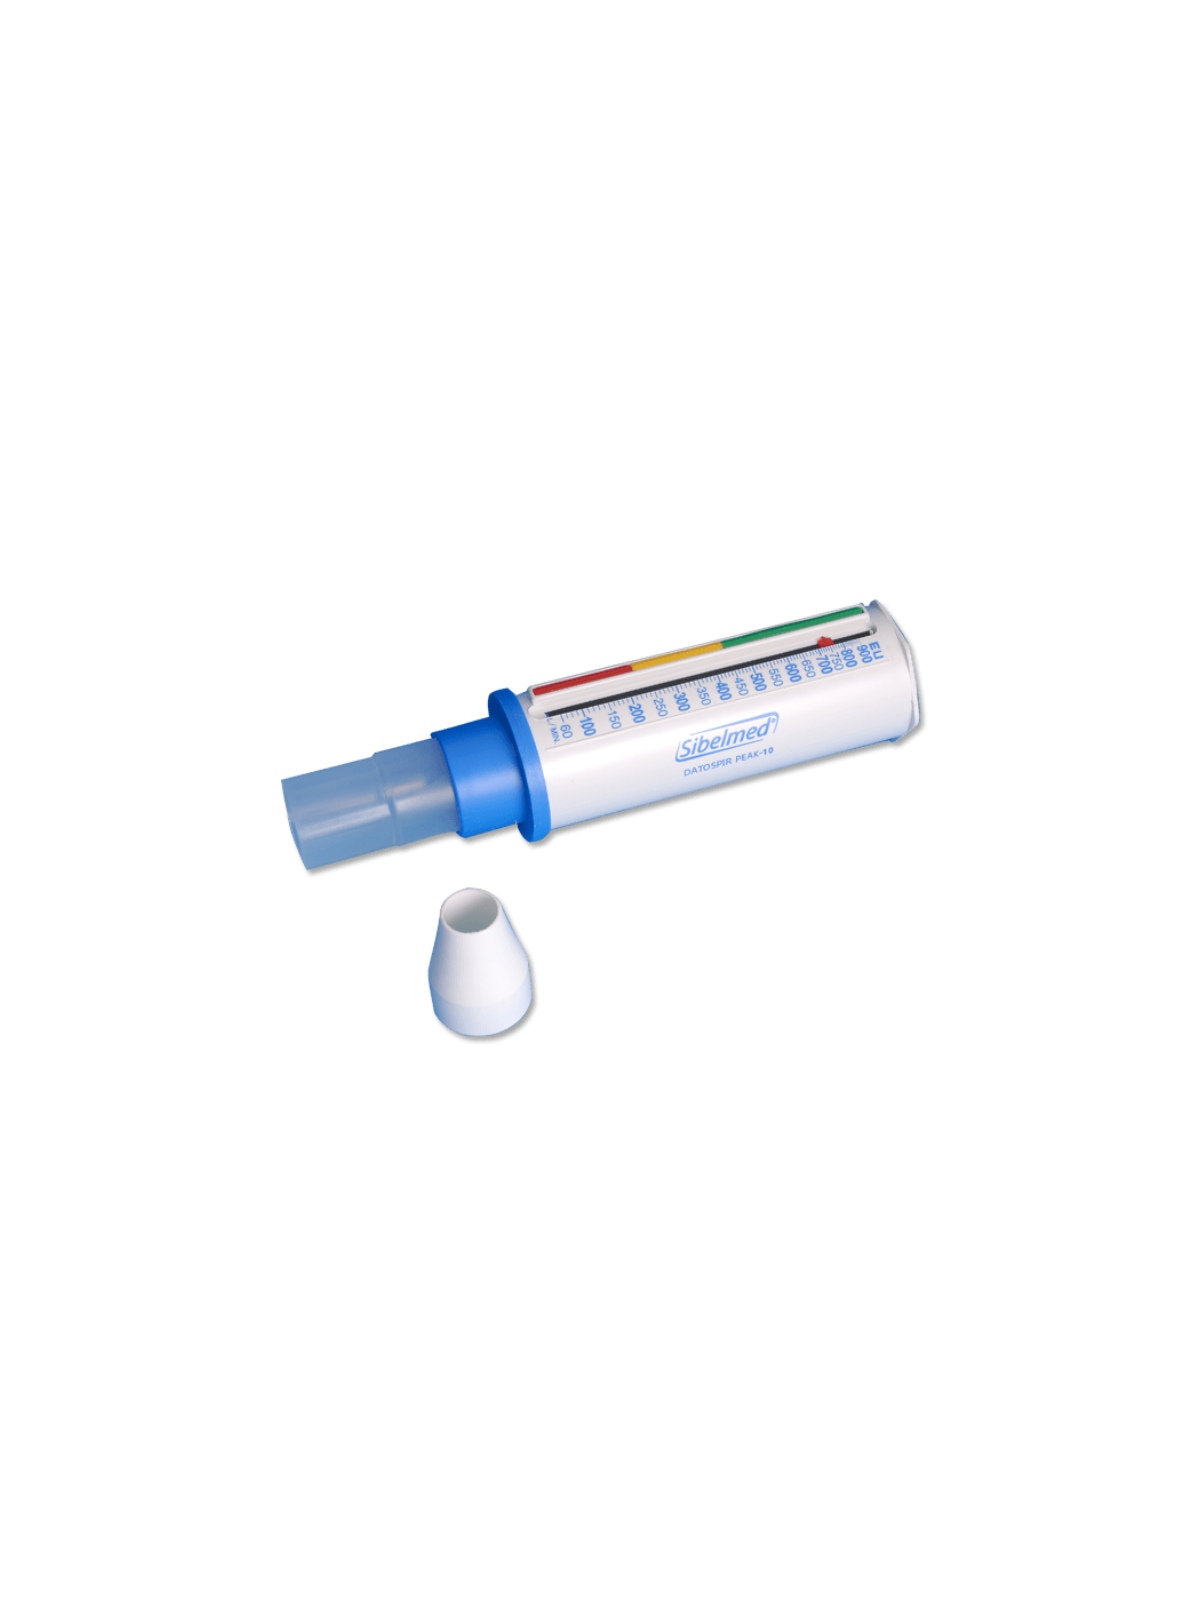 Medidor de flujo respiratorio DATOSPIR PEAK-10